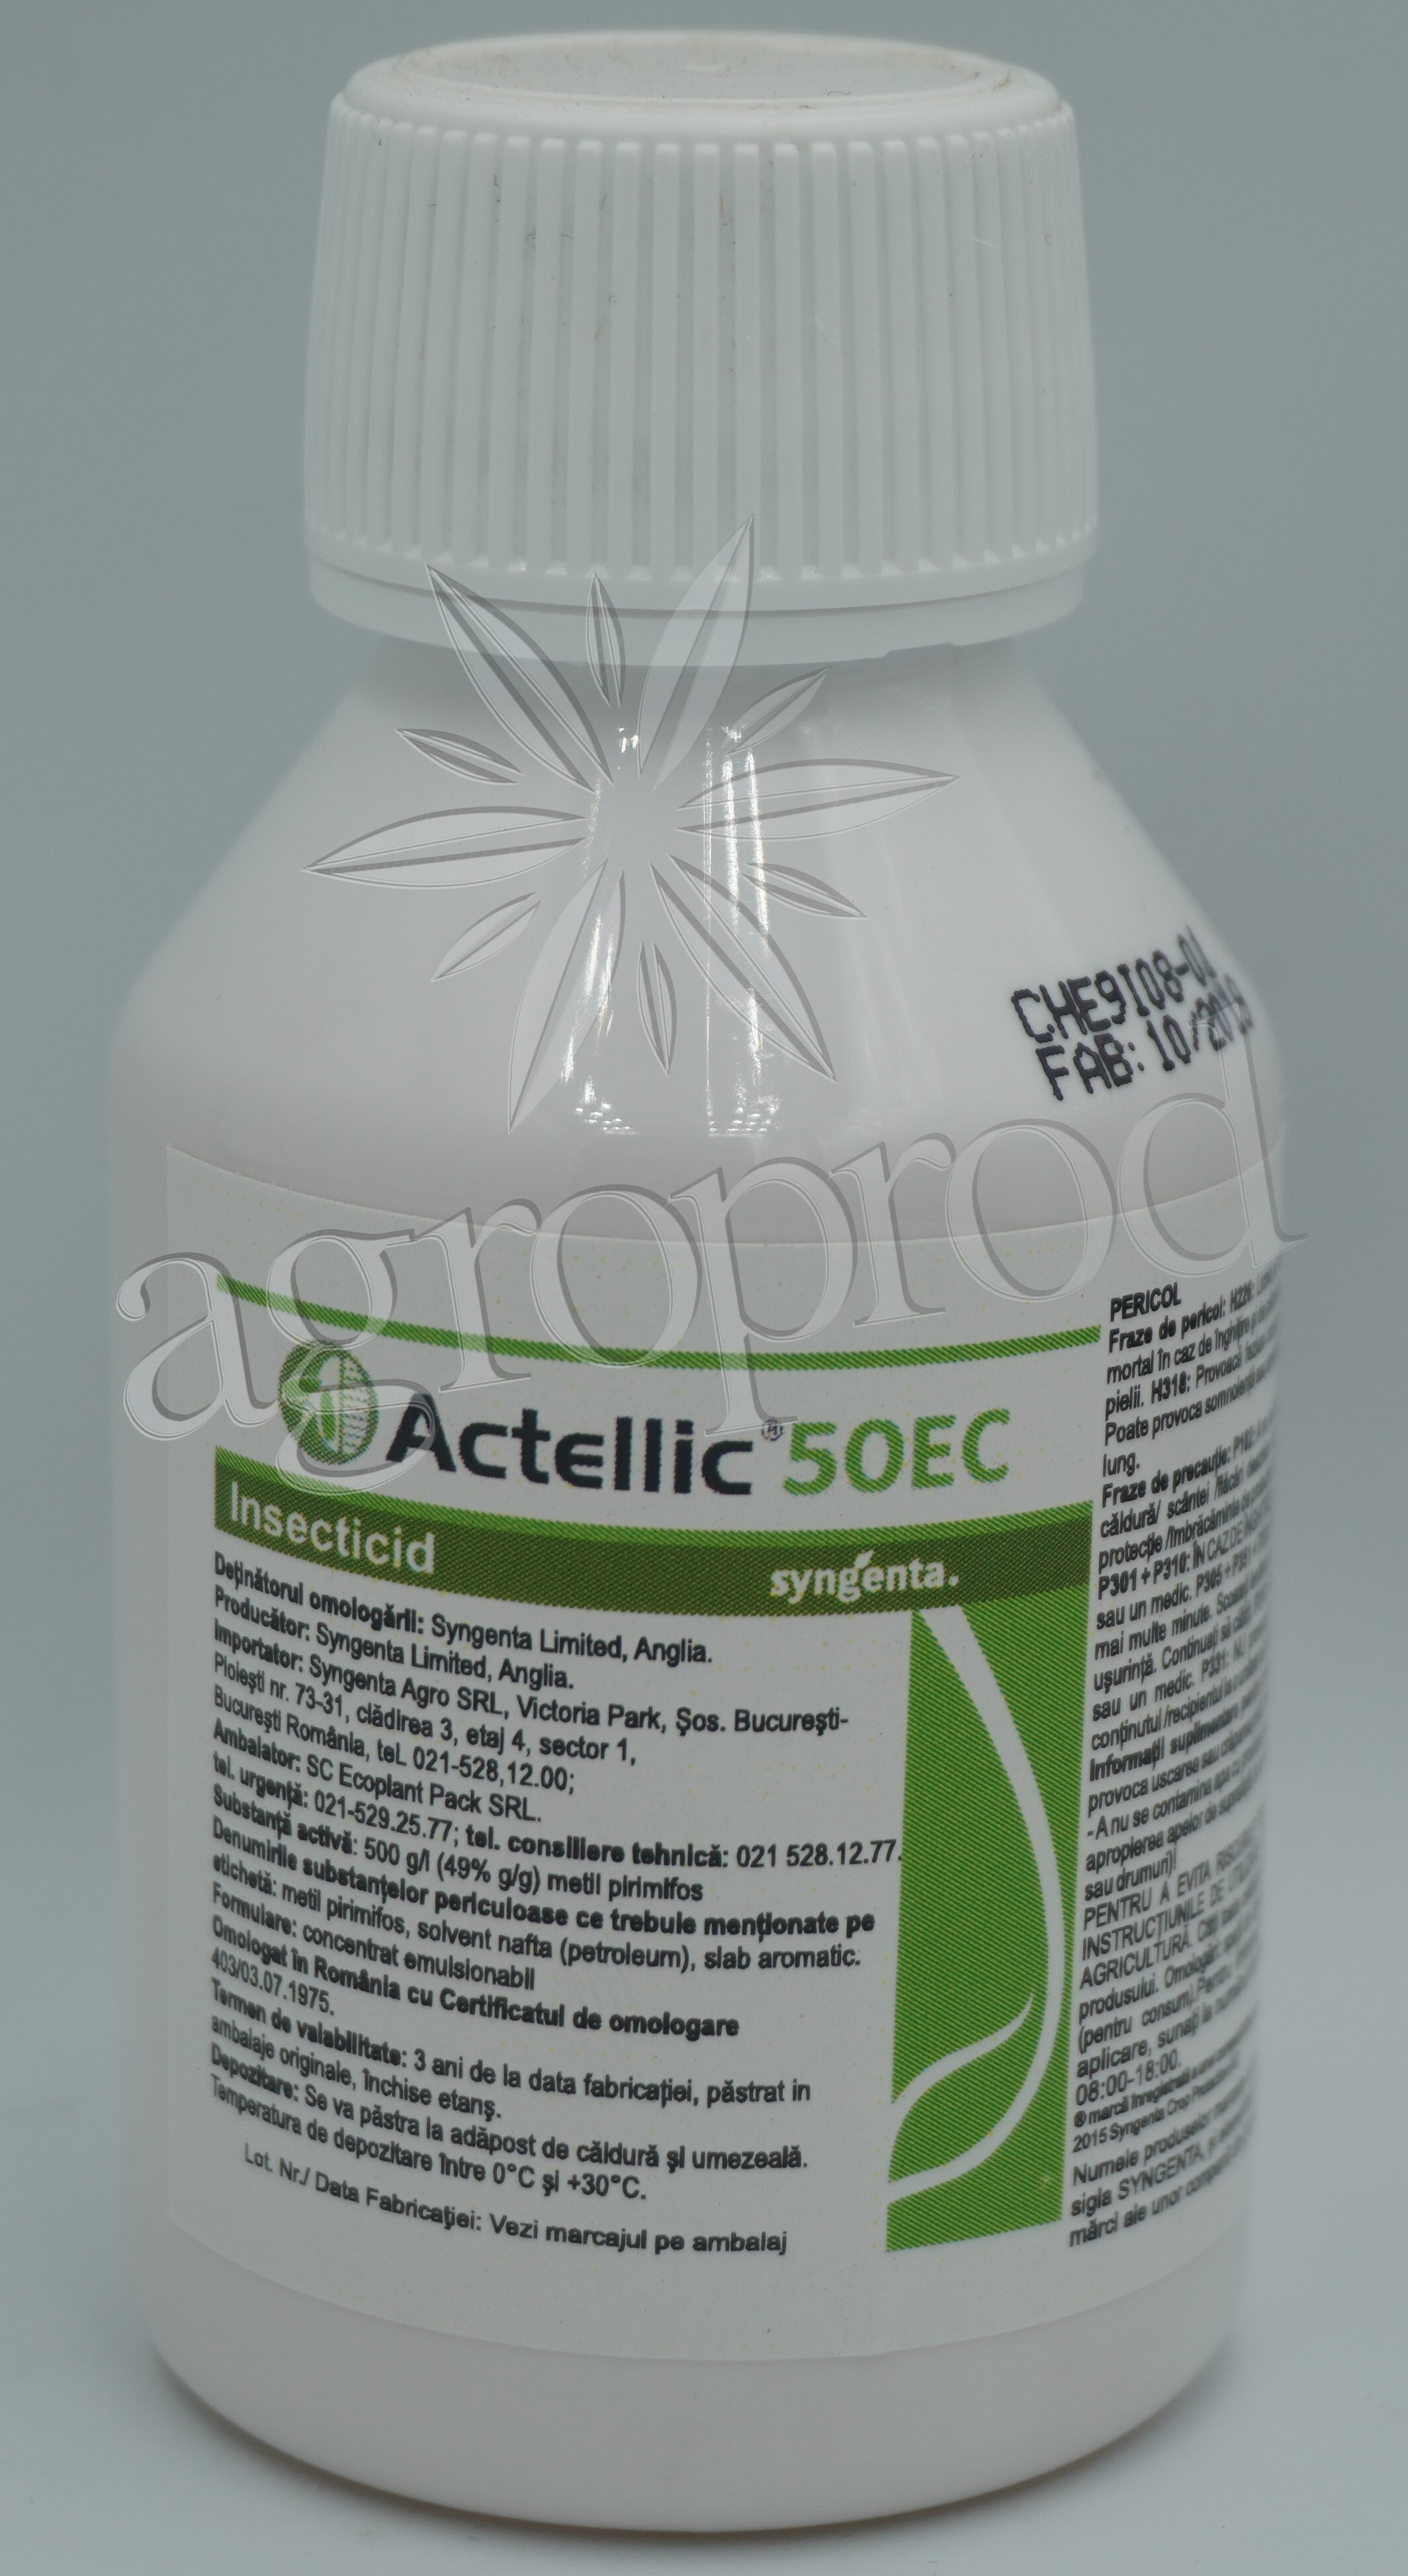 Actellic 50 EC 10ml